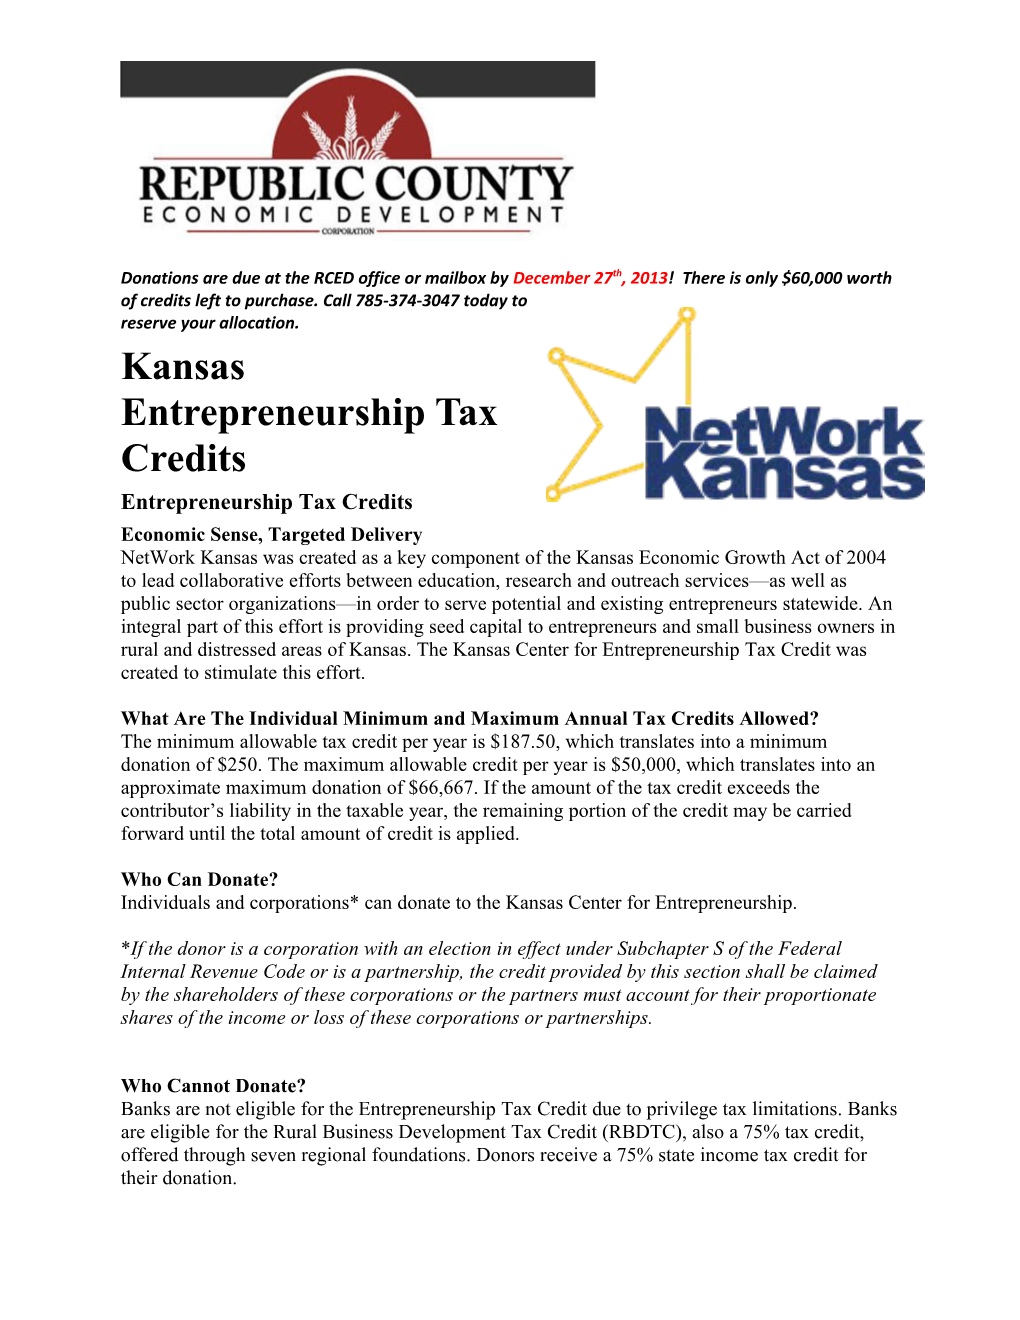 Kansas Entrepreneurship Tax Credits